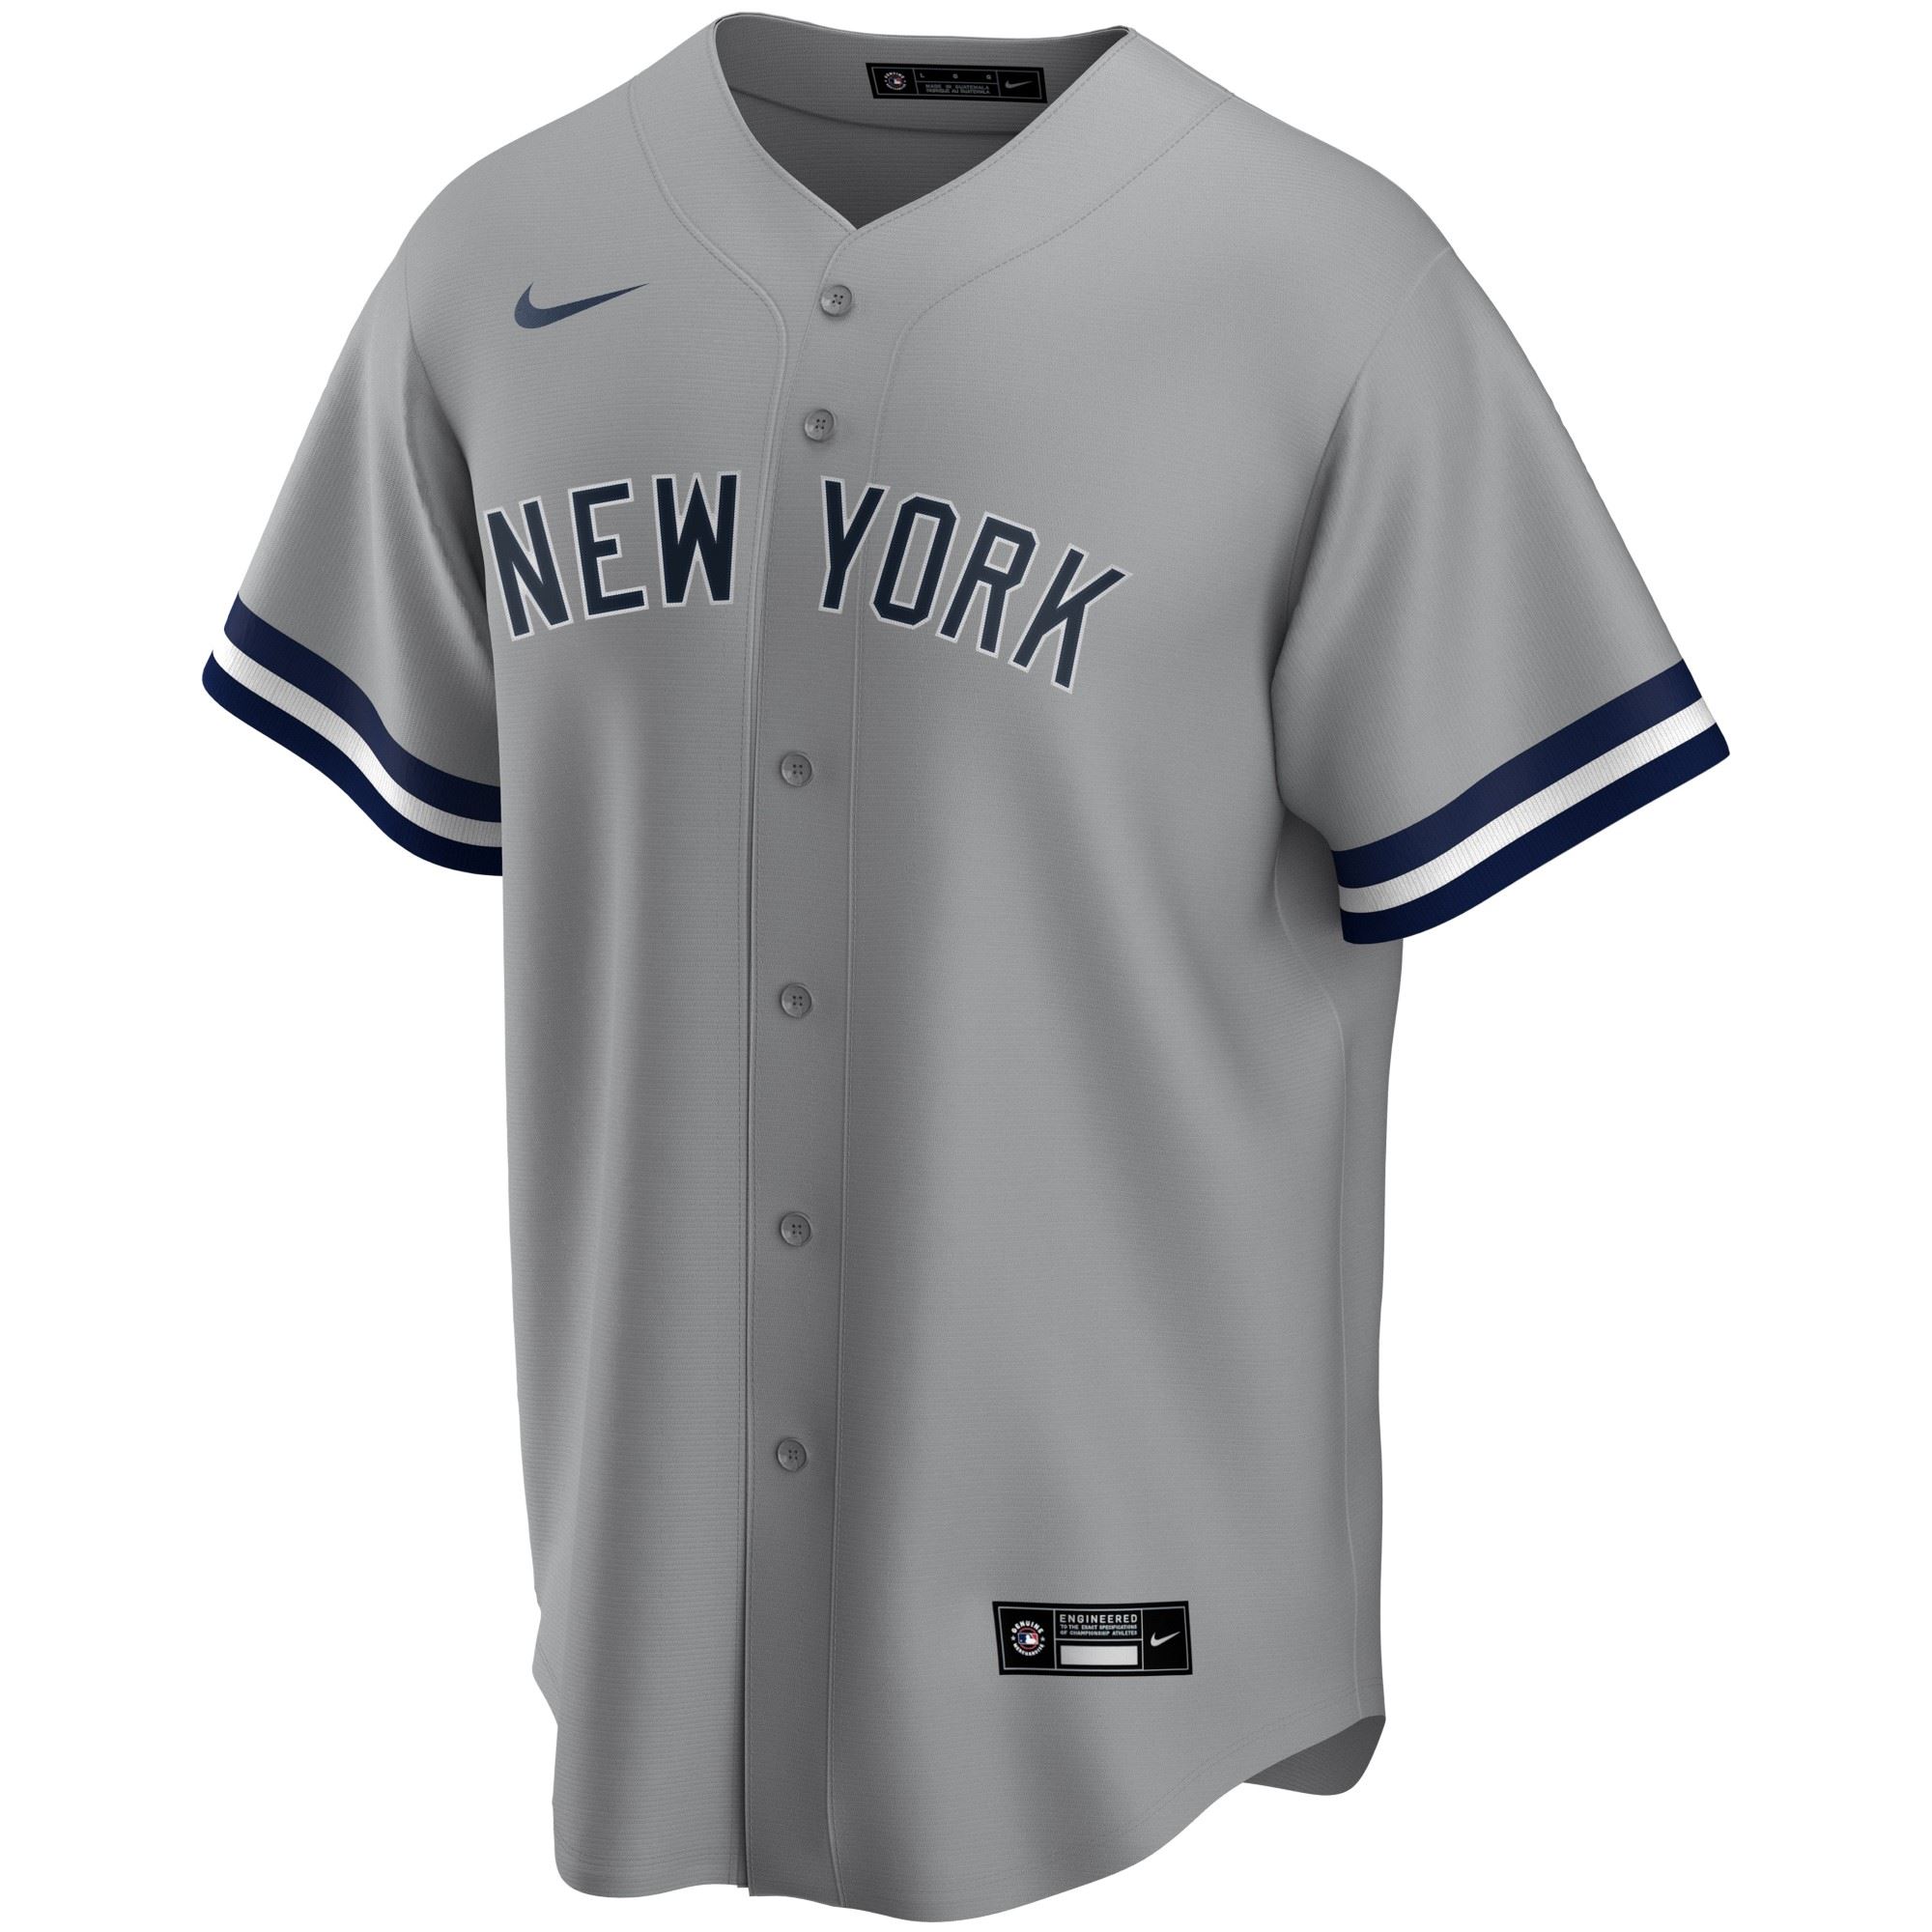 New York Yankees Official MLB Replica Road Jersey Grey Nike